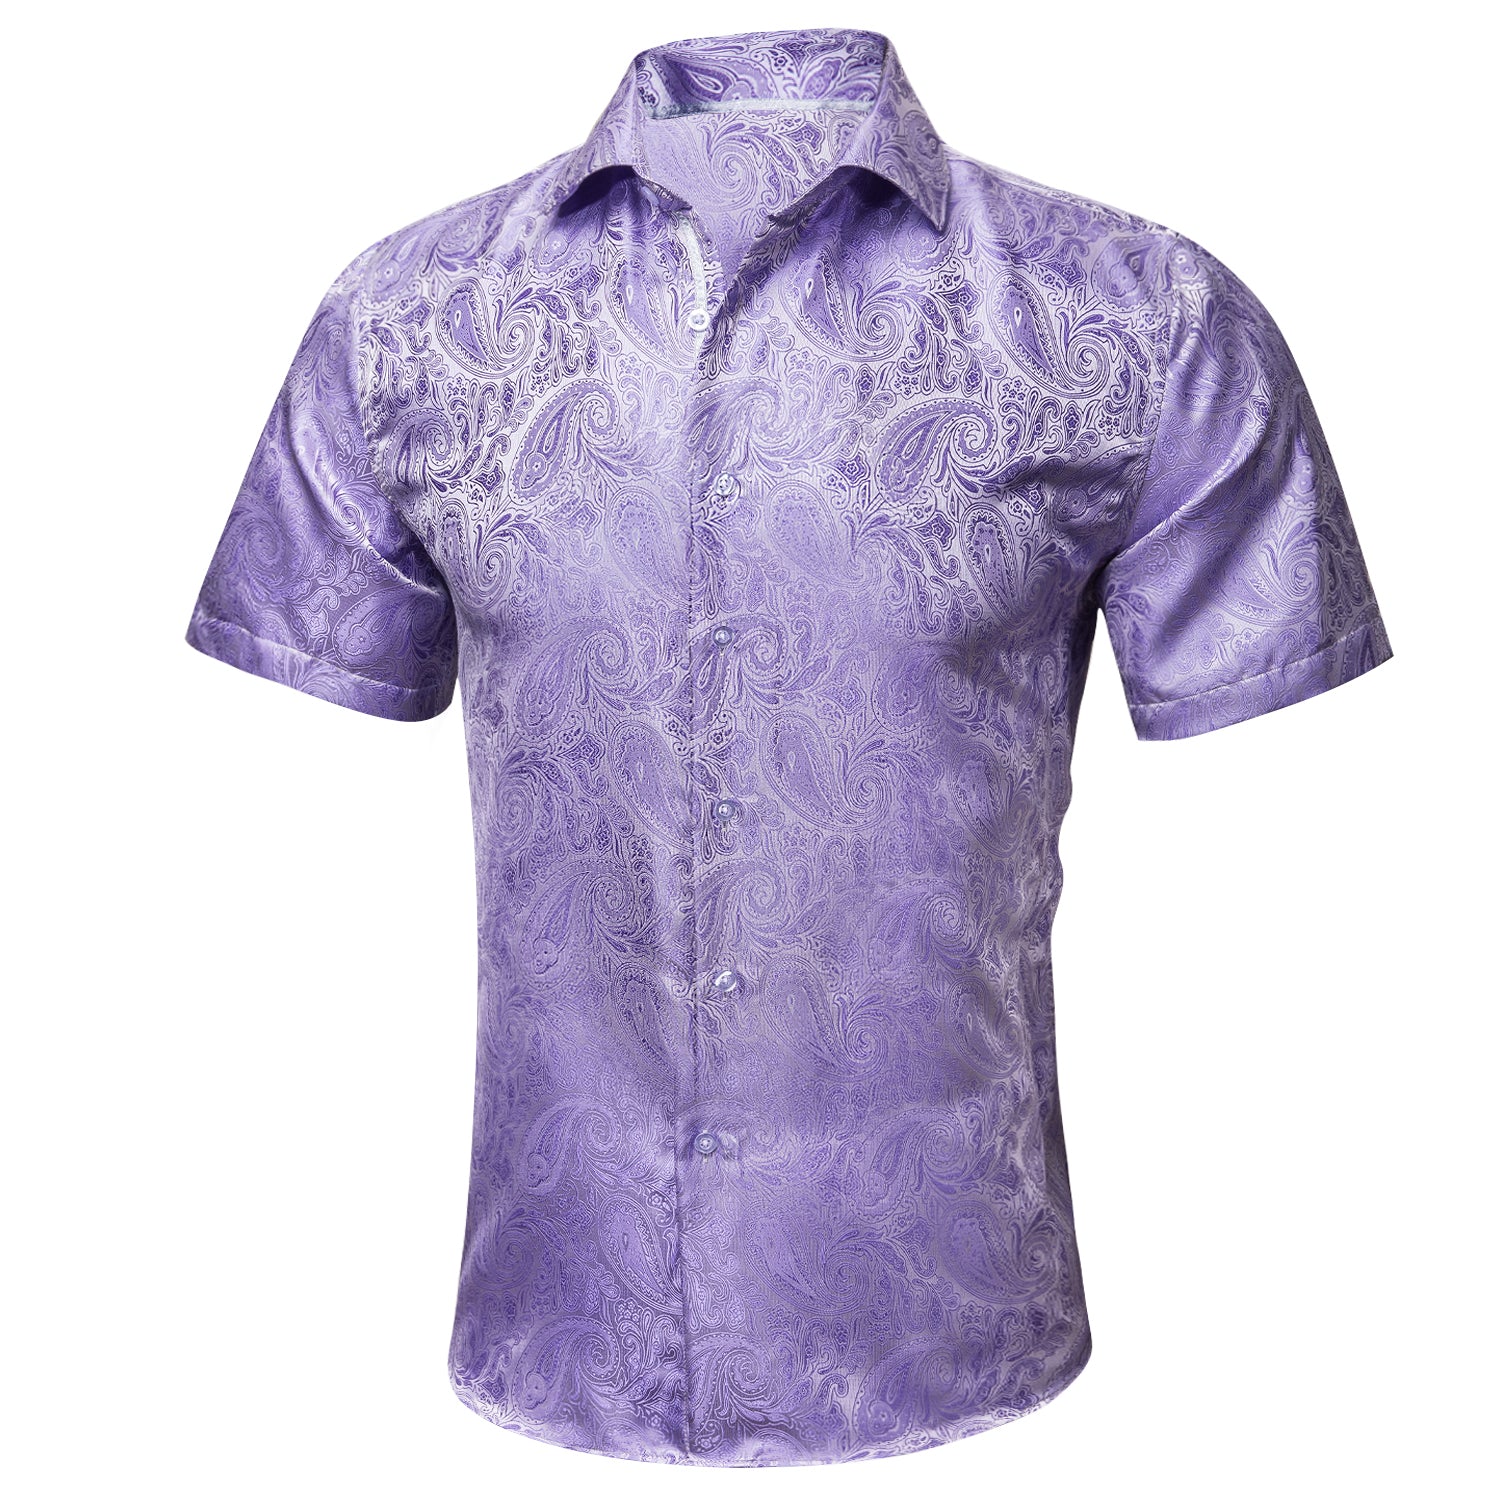 Barry.wang New Purple Paisley Short Sleeves Silk Shirt